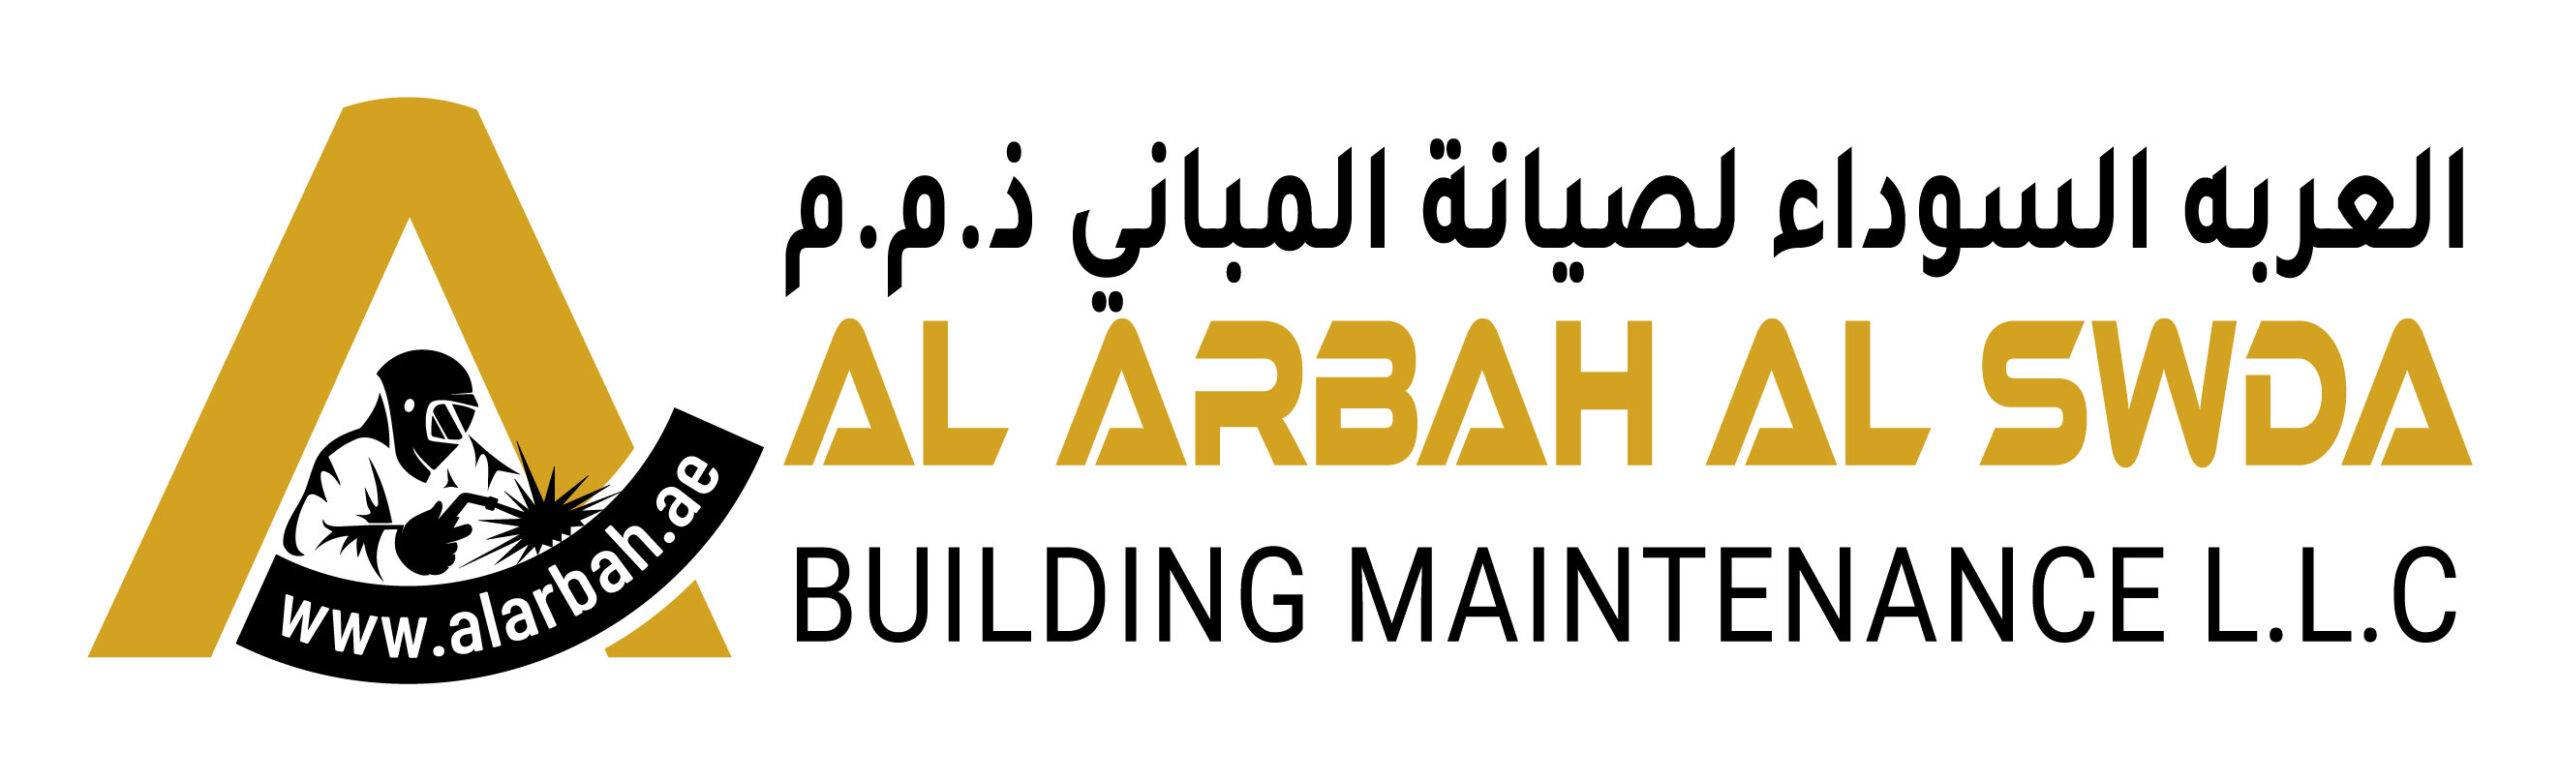 AL ARBAH AL SWDA Building Maintenance L.L.C